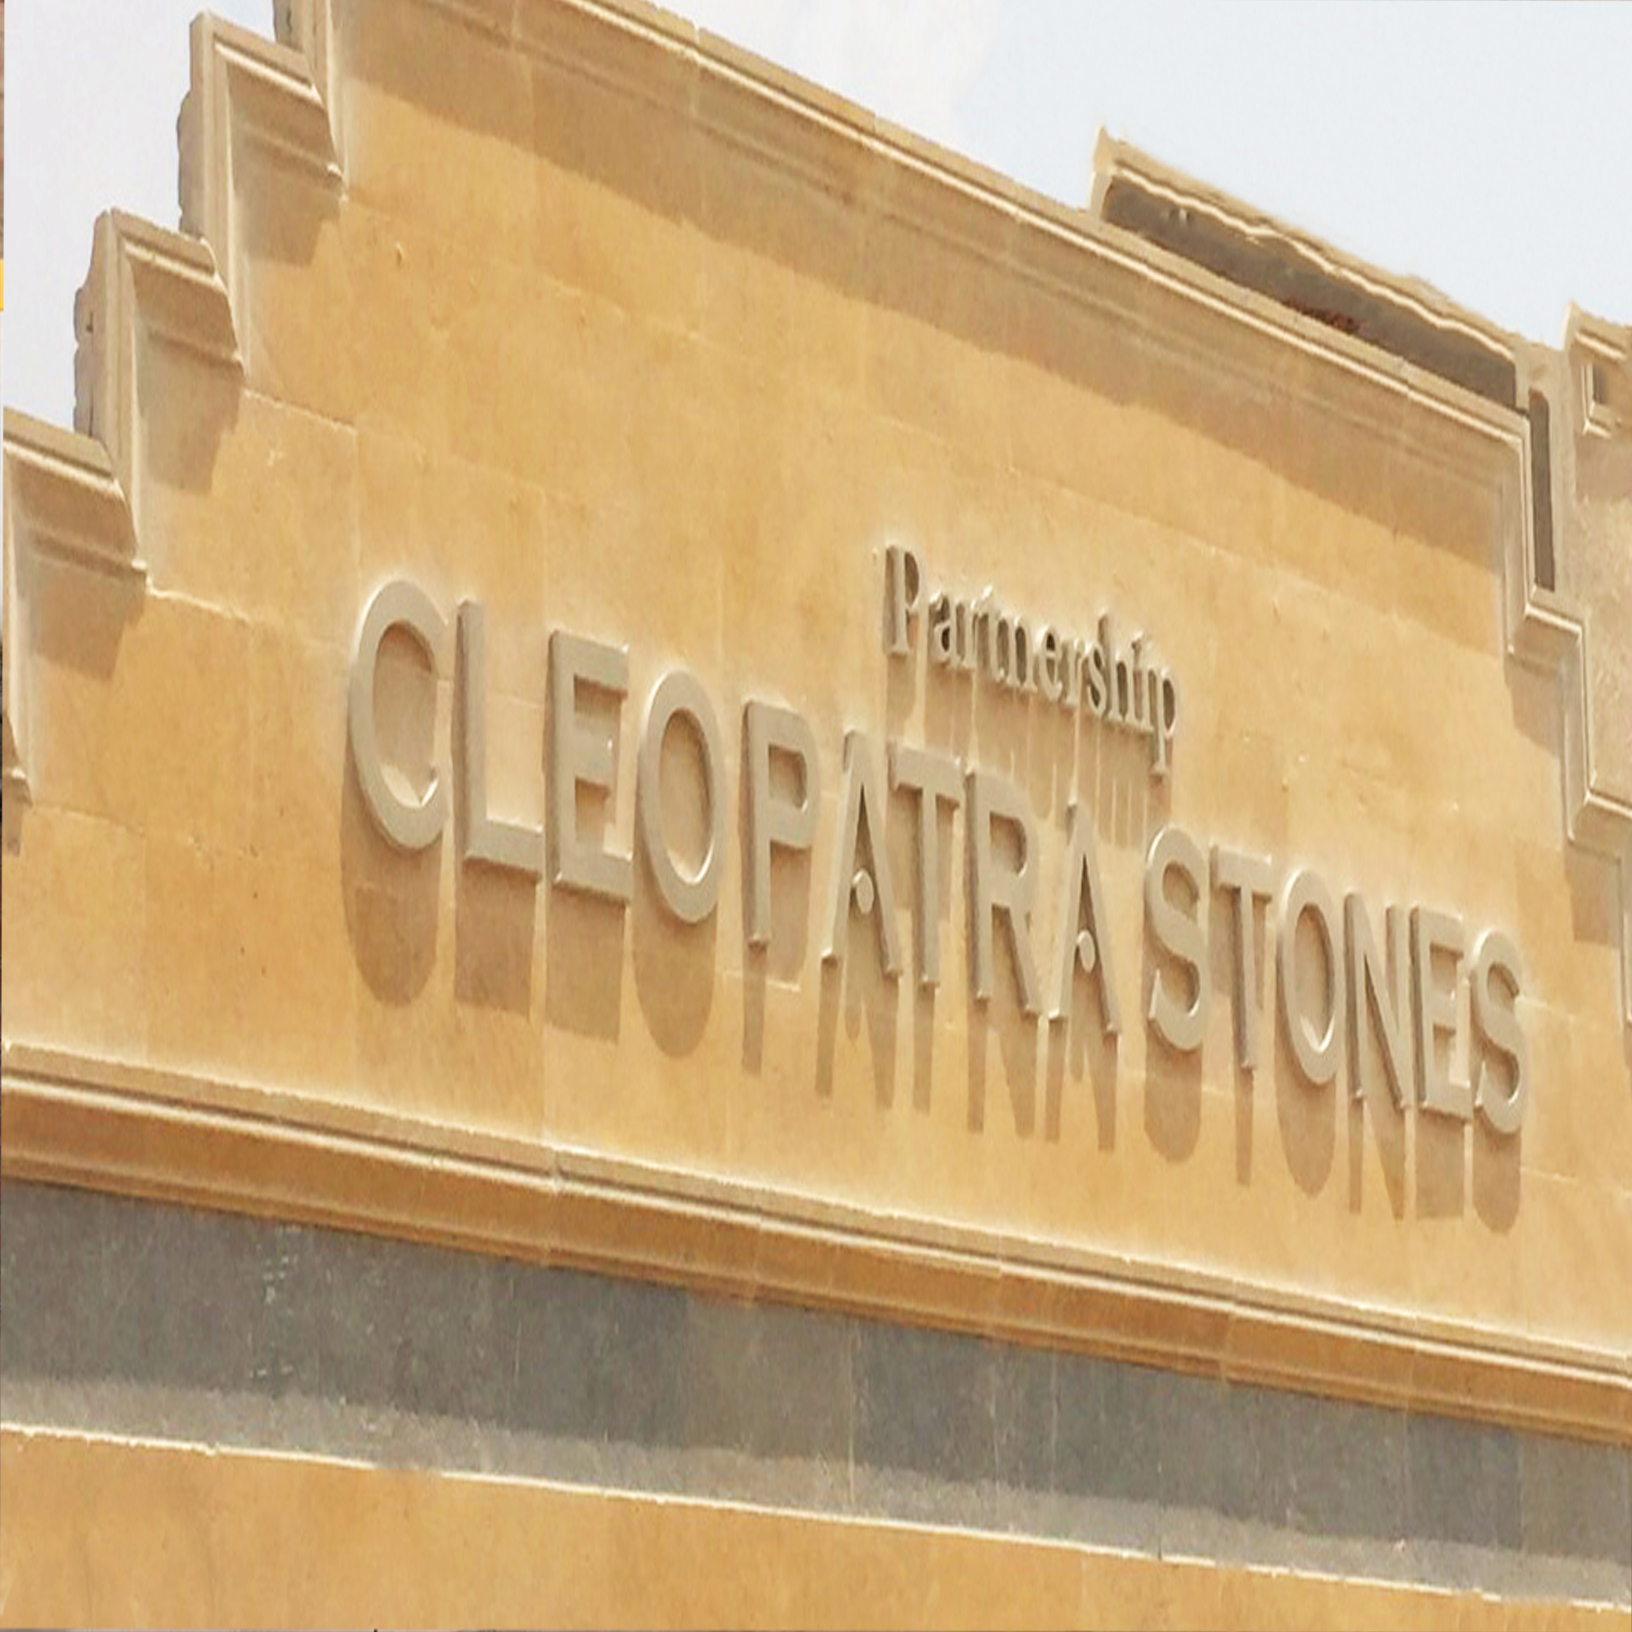 Cleopatra Stone Images